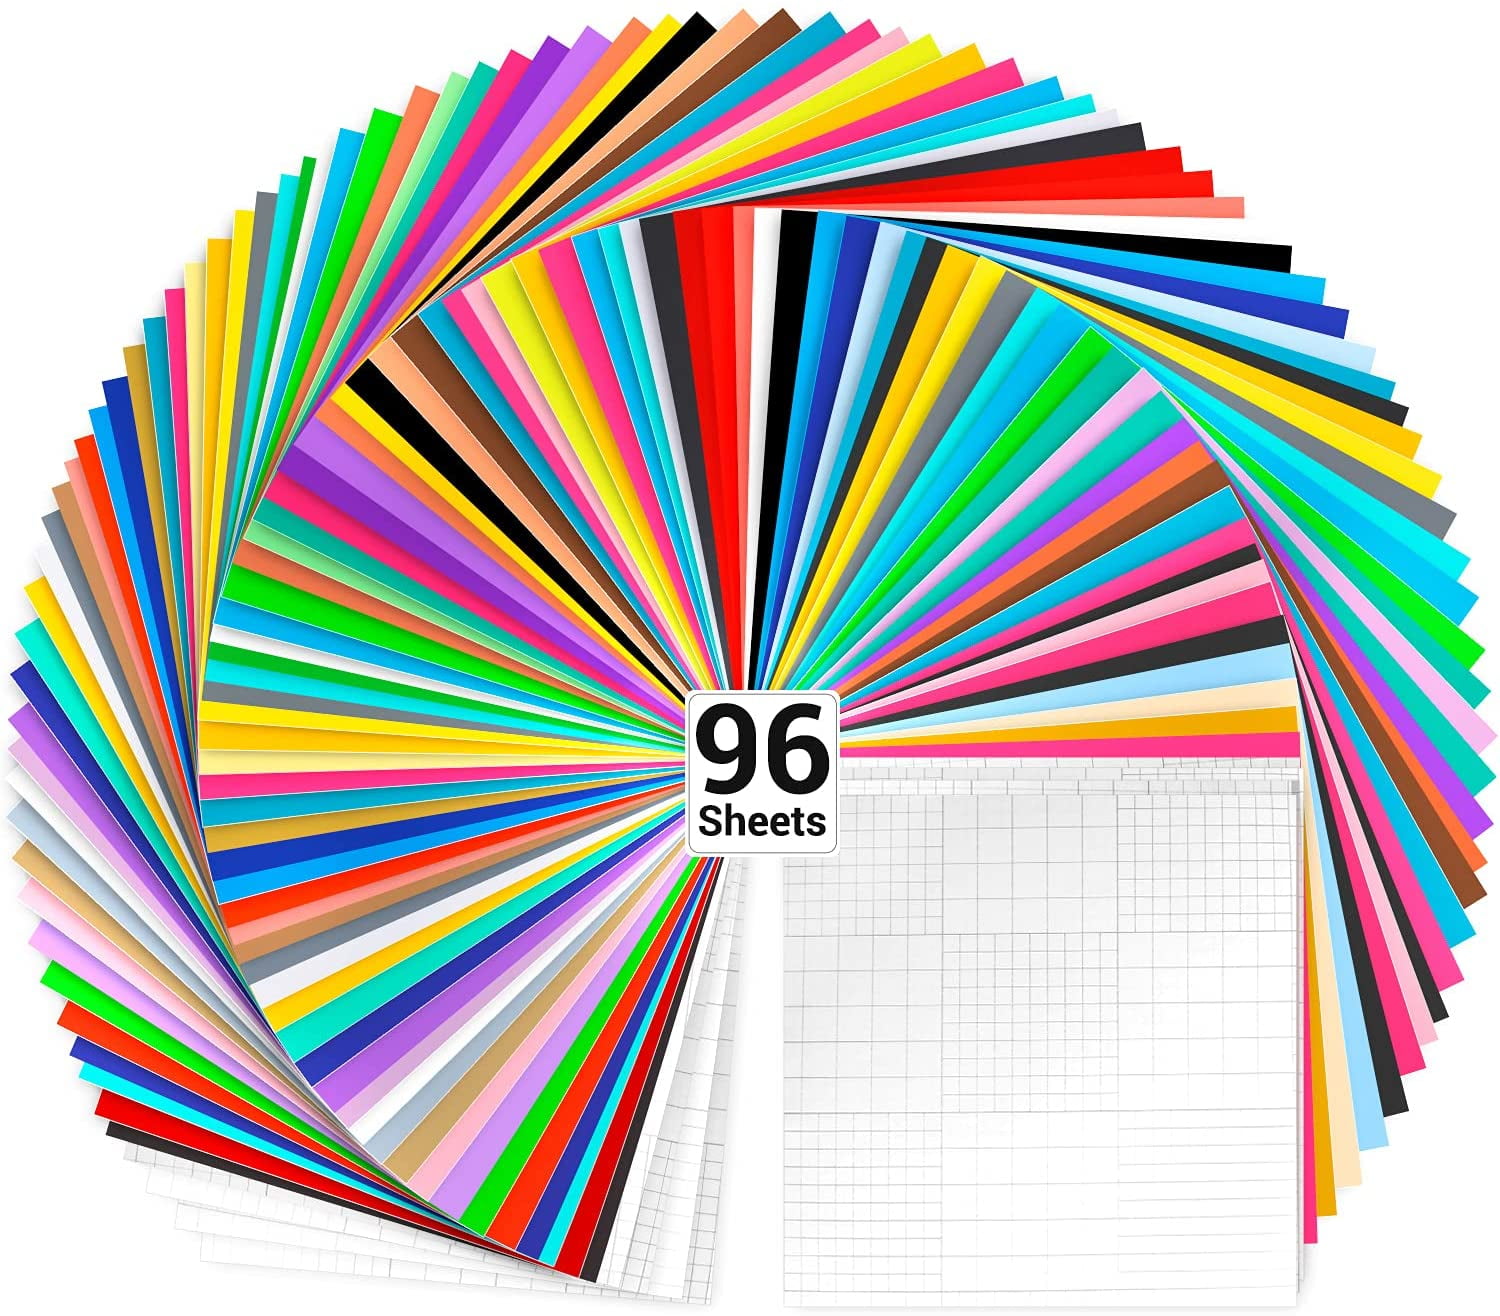 Permanent Adhesive Transfer Vinyl HTV Sheets Assorted Colors 70 Sheets